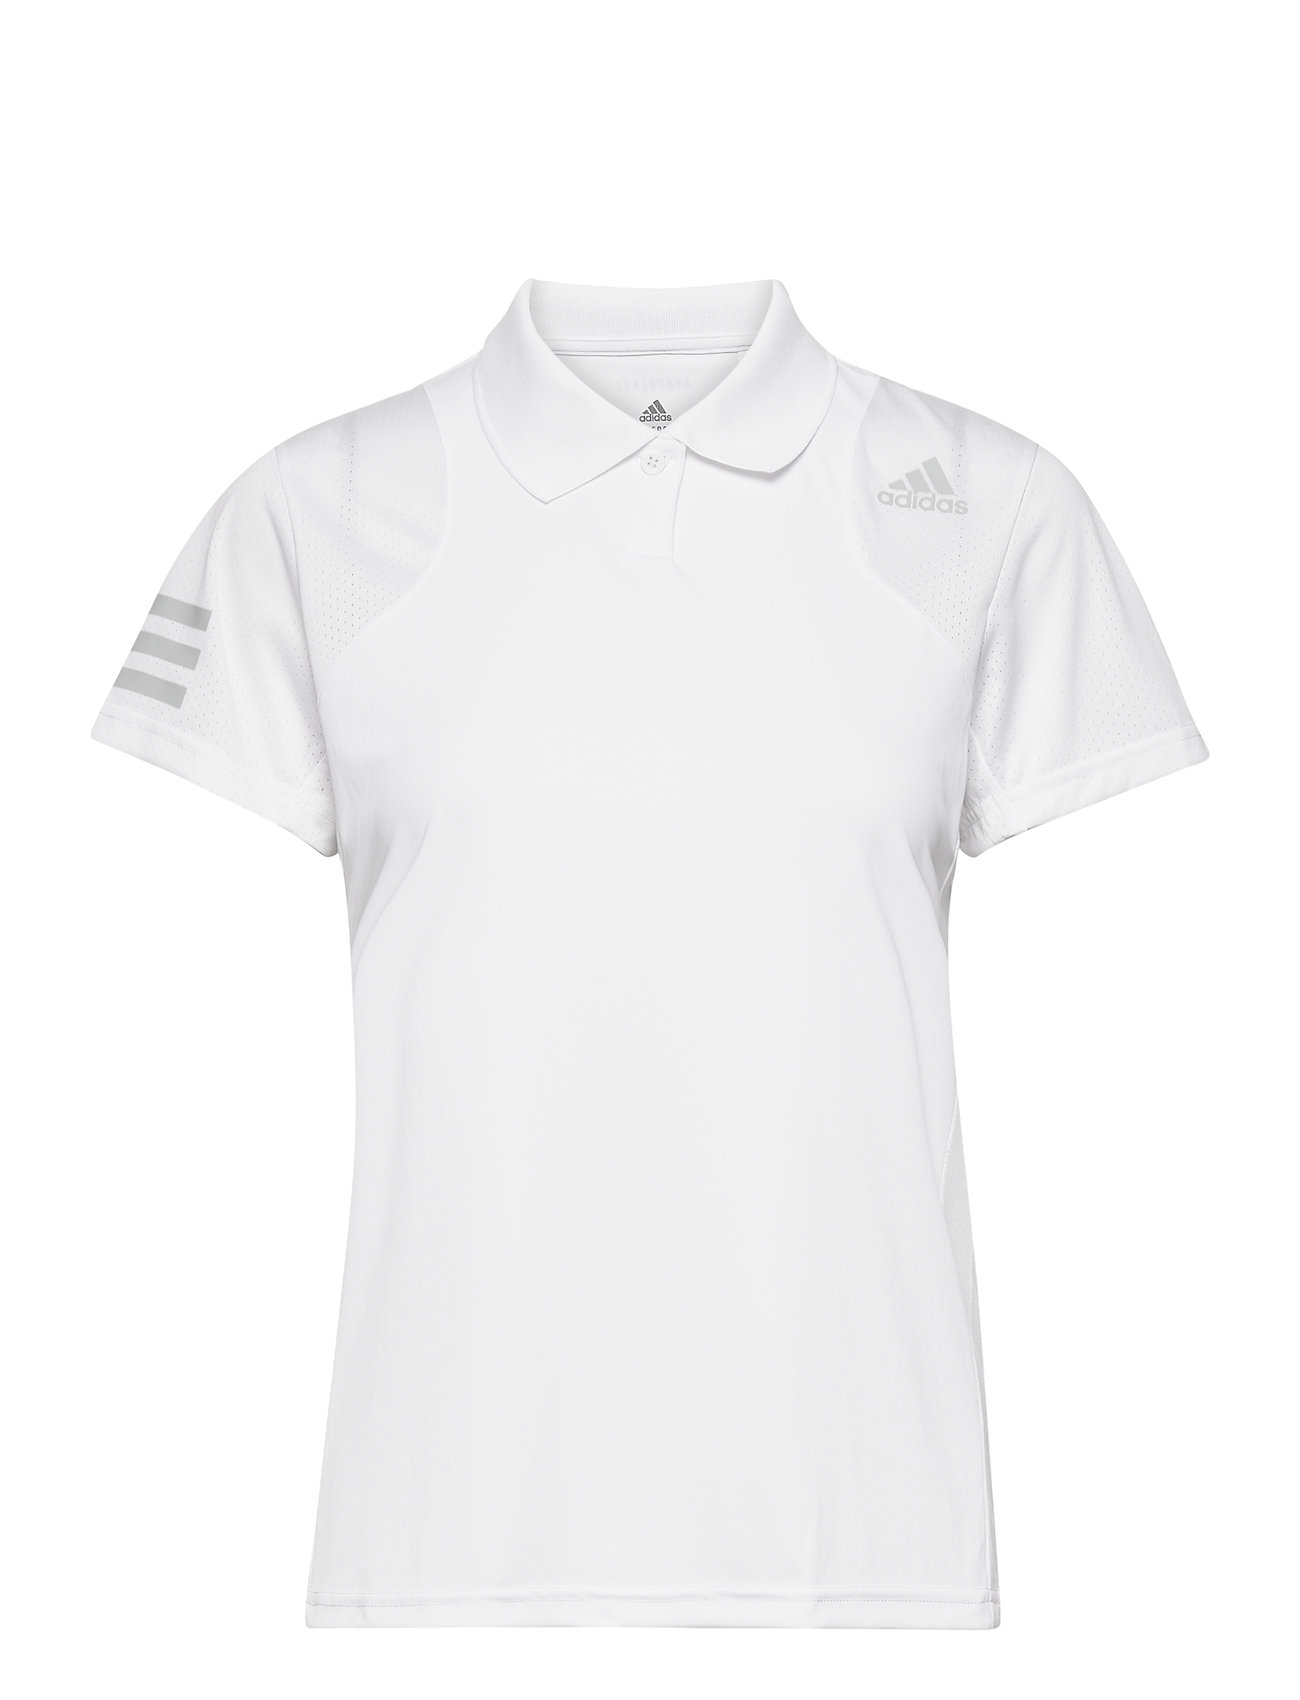 Club Polo Shirt T-shirts & Tops Short-sleeved Valkoinen Adidas Performance, adidas Performance